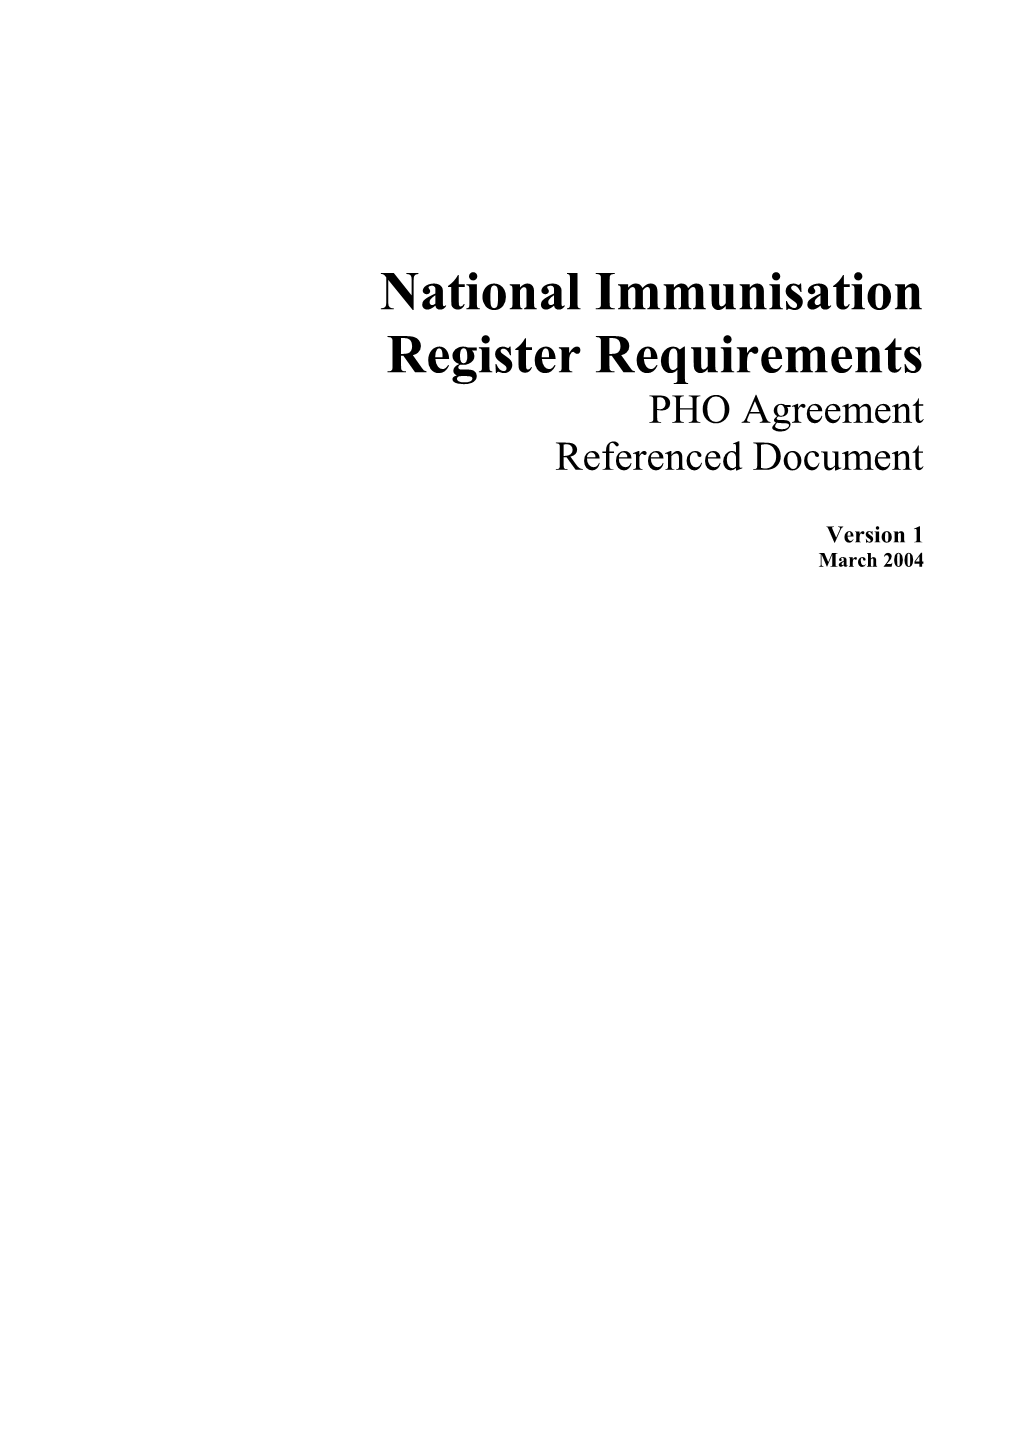 National Immunisation Register Requirements